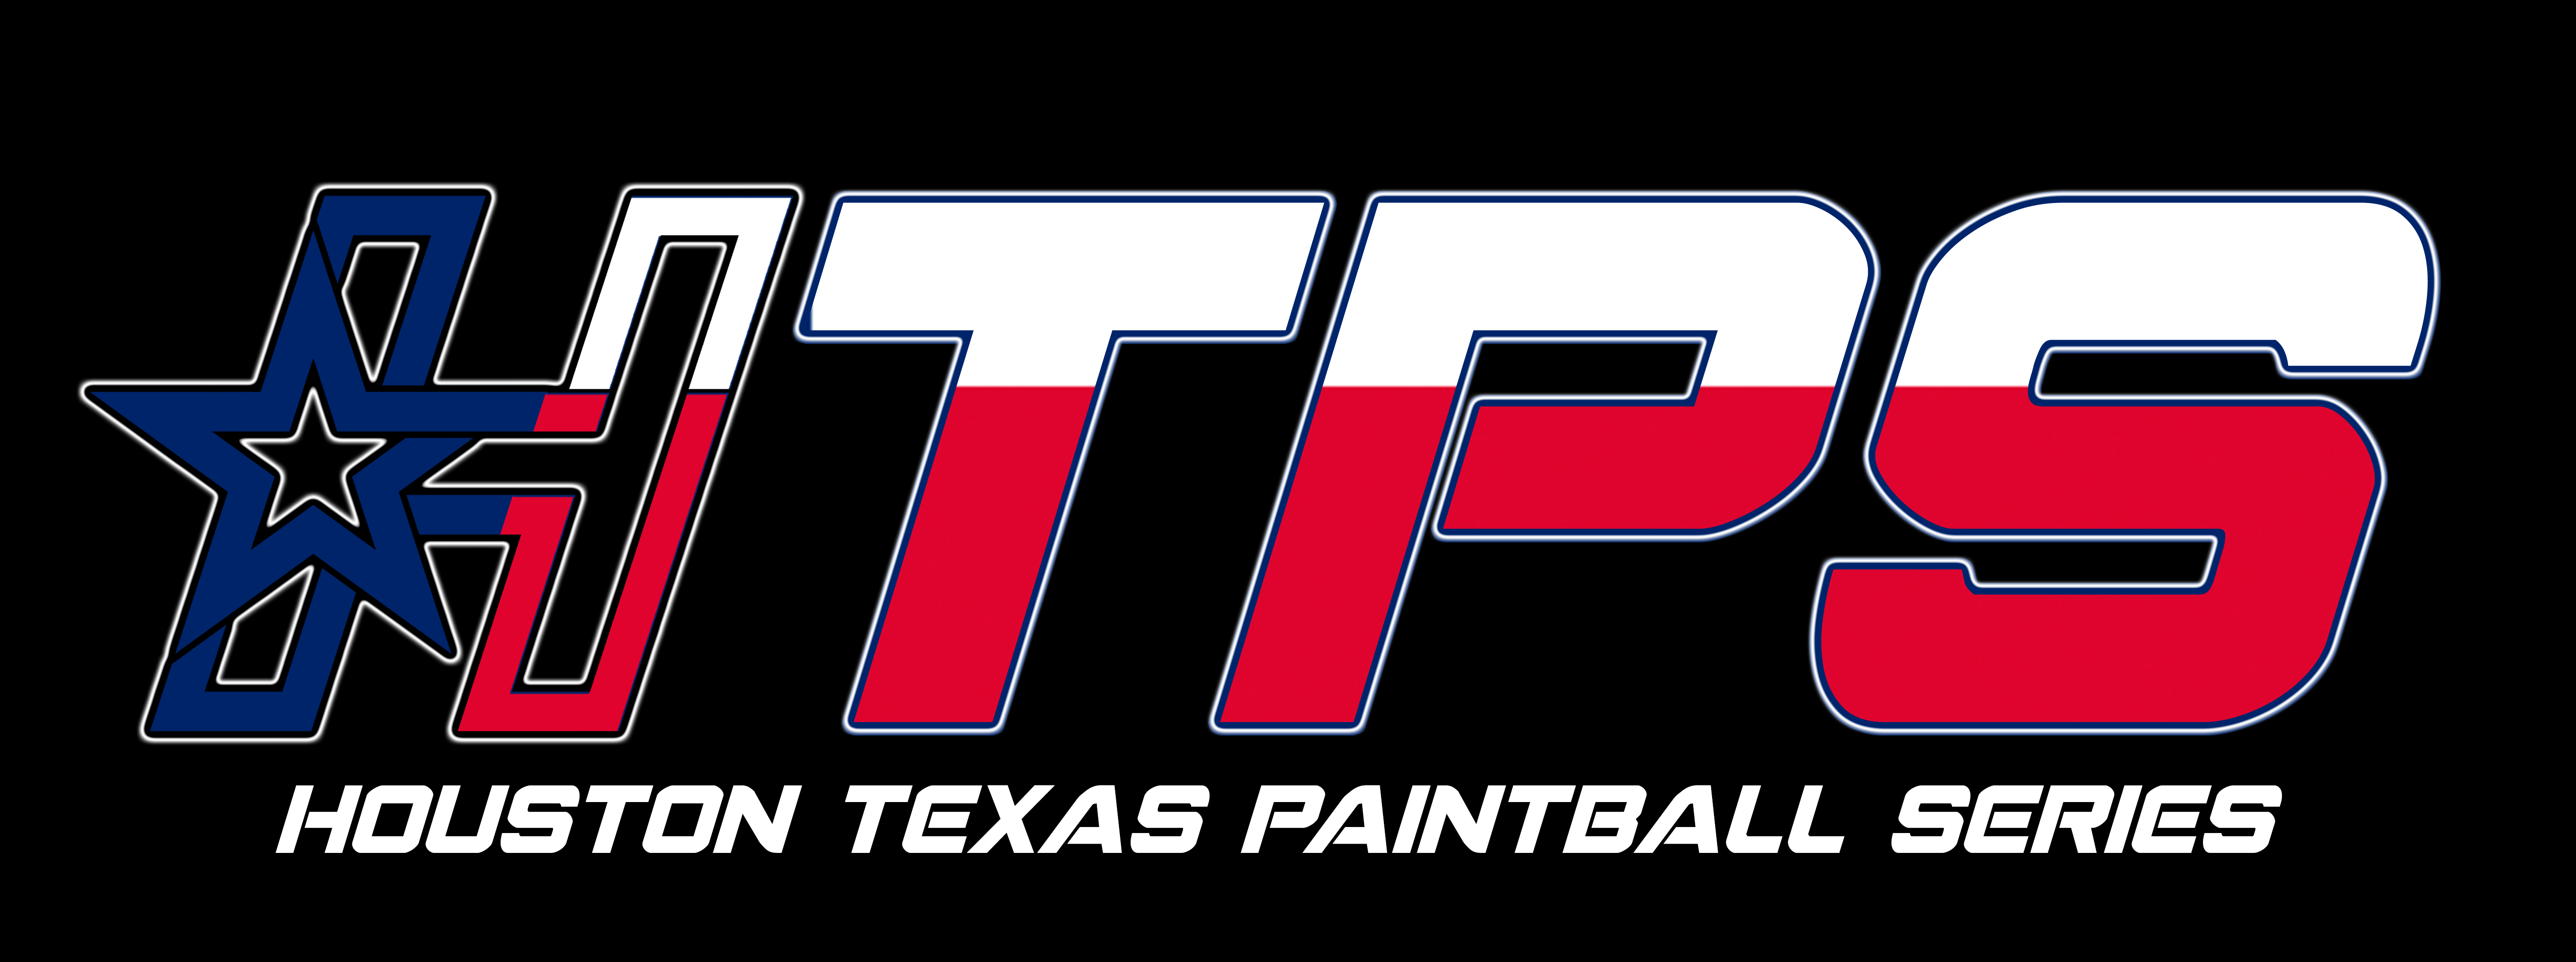 Houston Texas Paintball Series